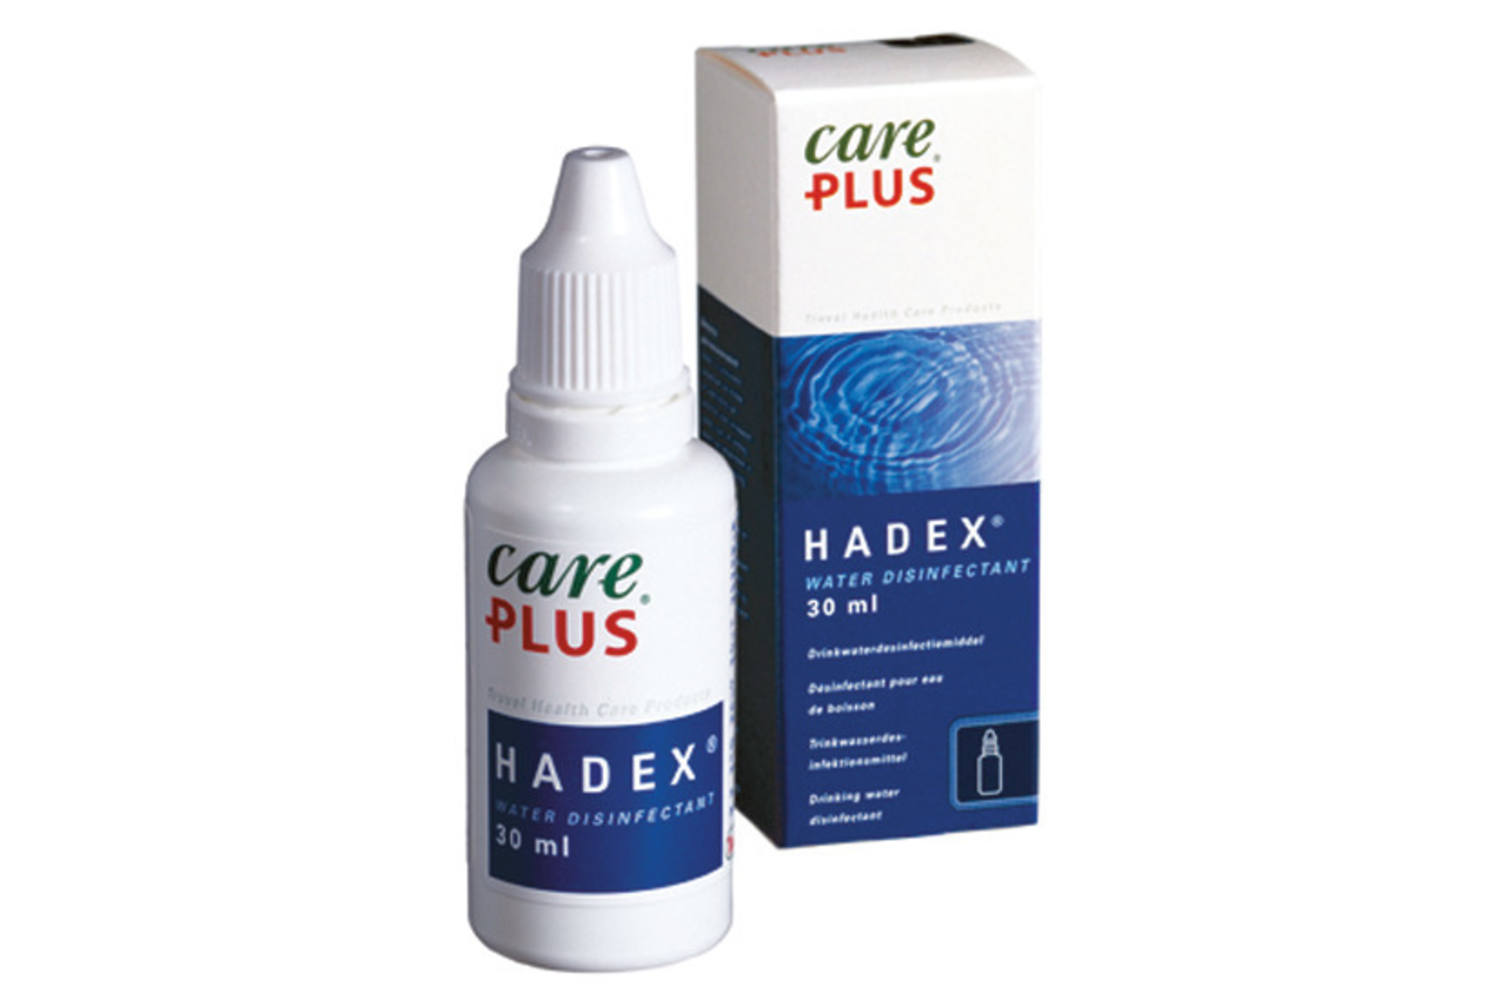 Hadex drinkwaterdesinfectie - 30ml